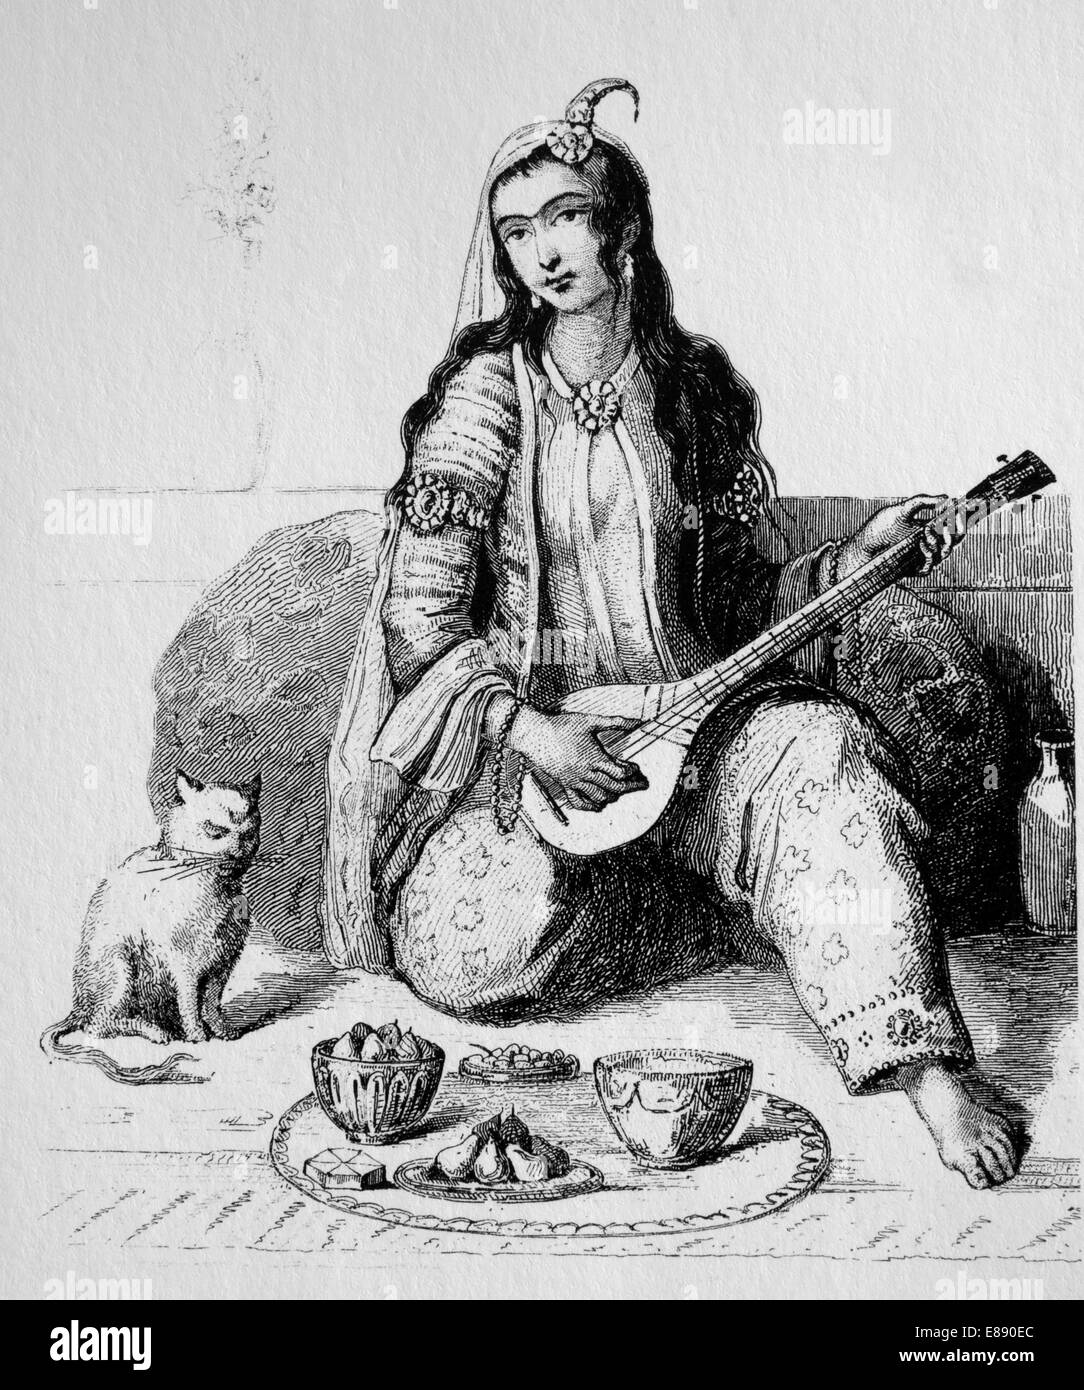 Asien. Persisch. Harem. Musiker. 1840. Gravur. Stockfoto